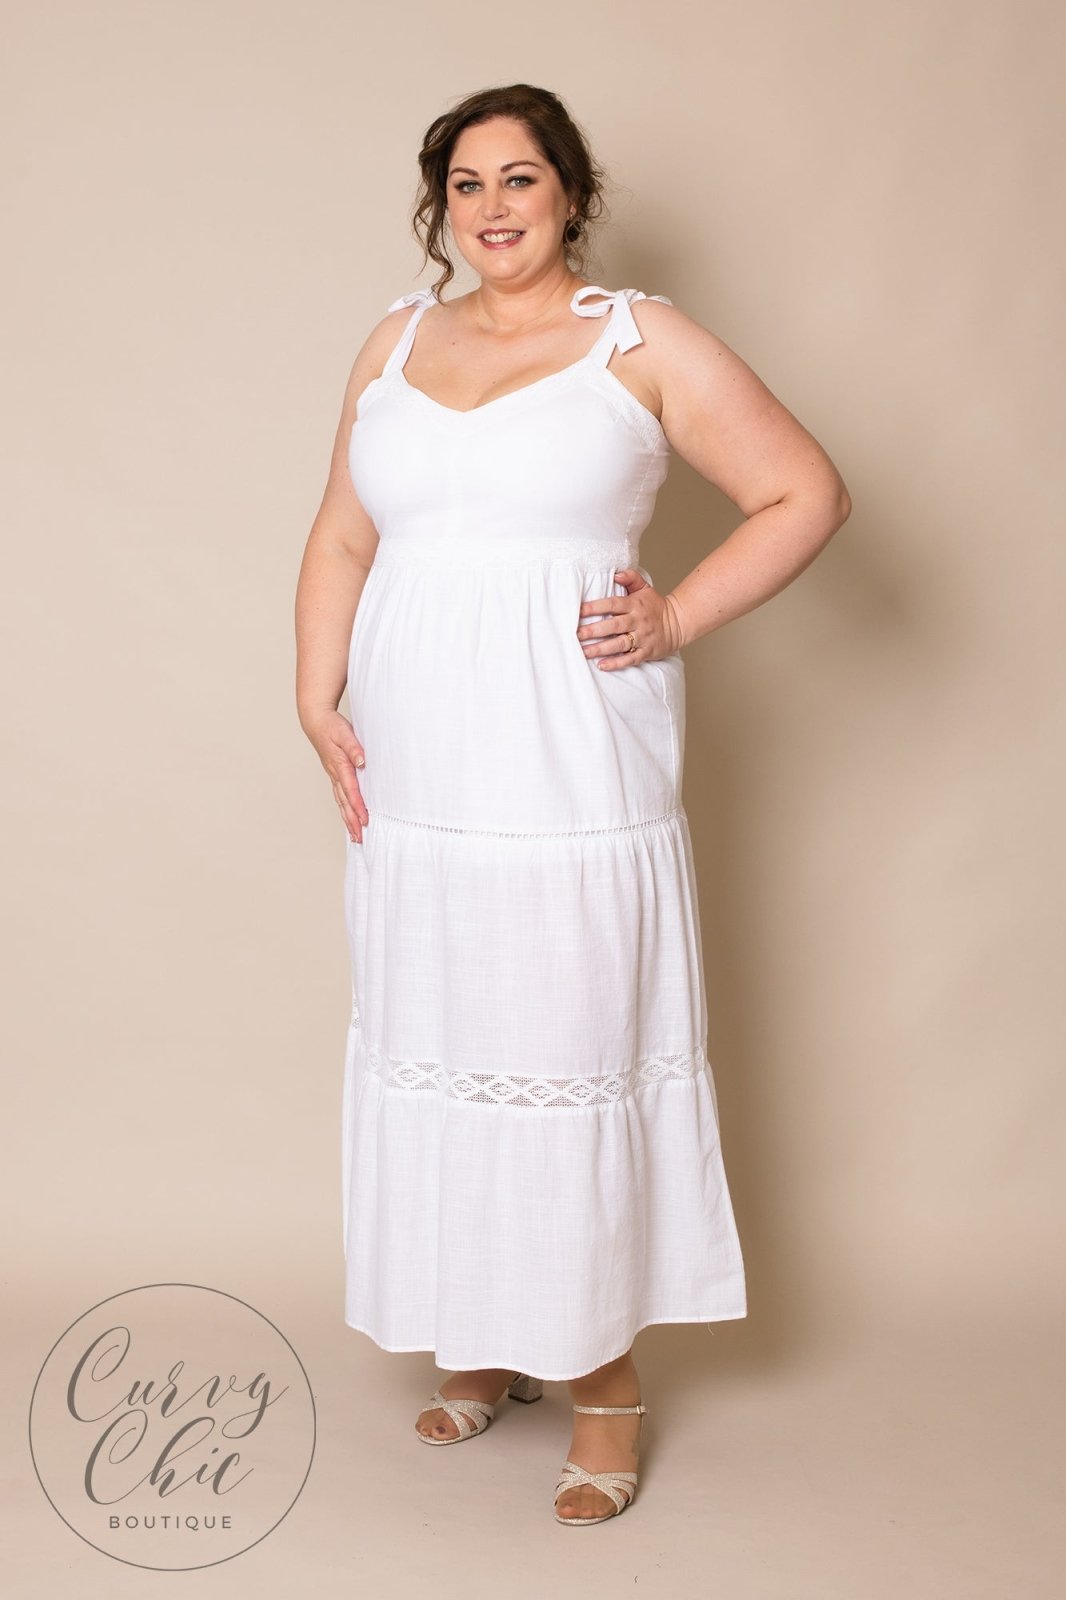 White Cotton Plus Size Dress